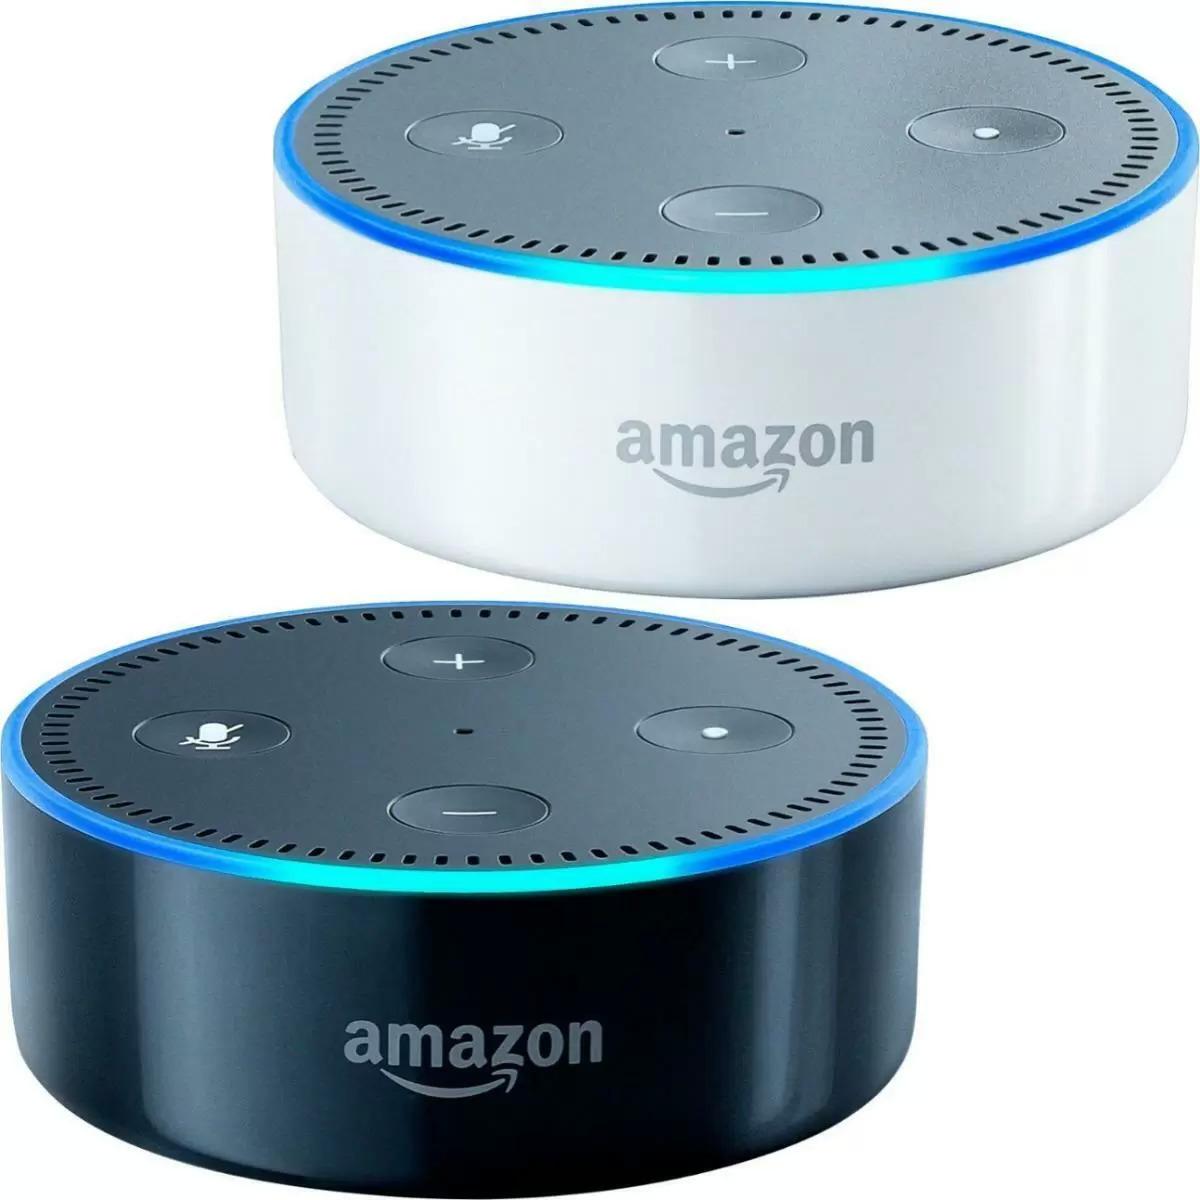 Amazon Echo Dot 2nd Generation Smart Speaker for $3.99